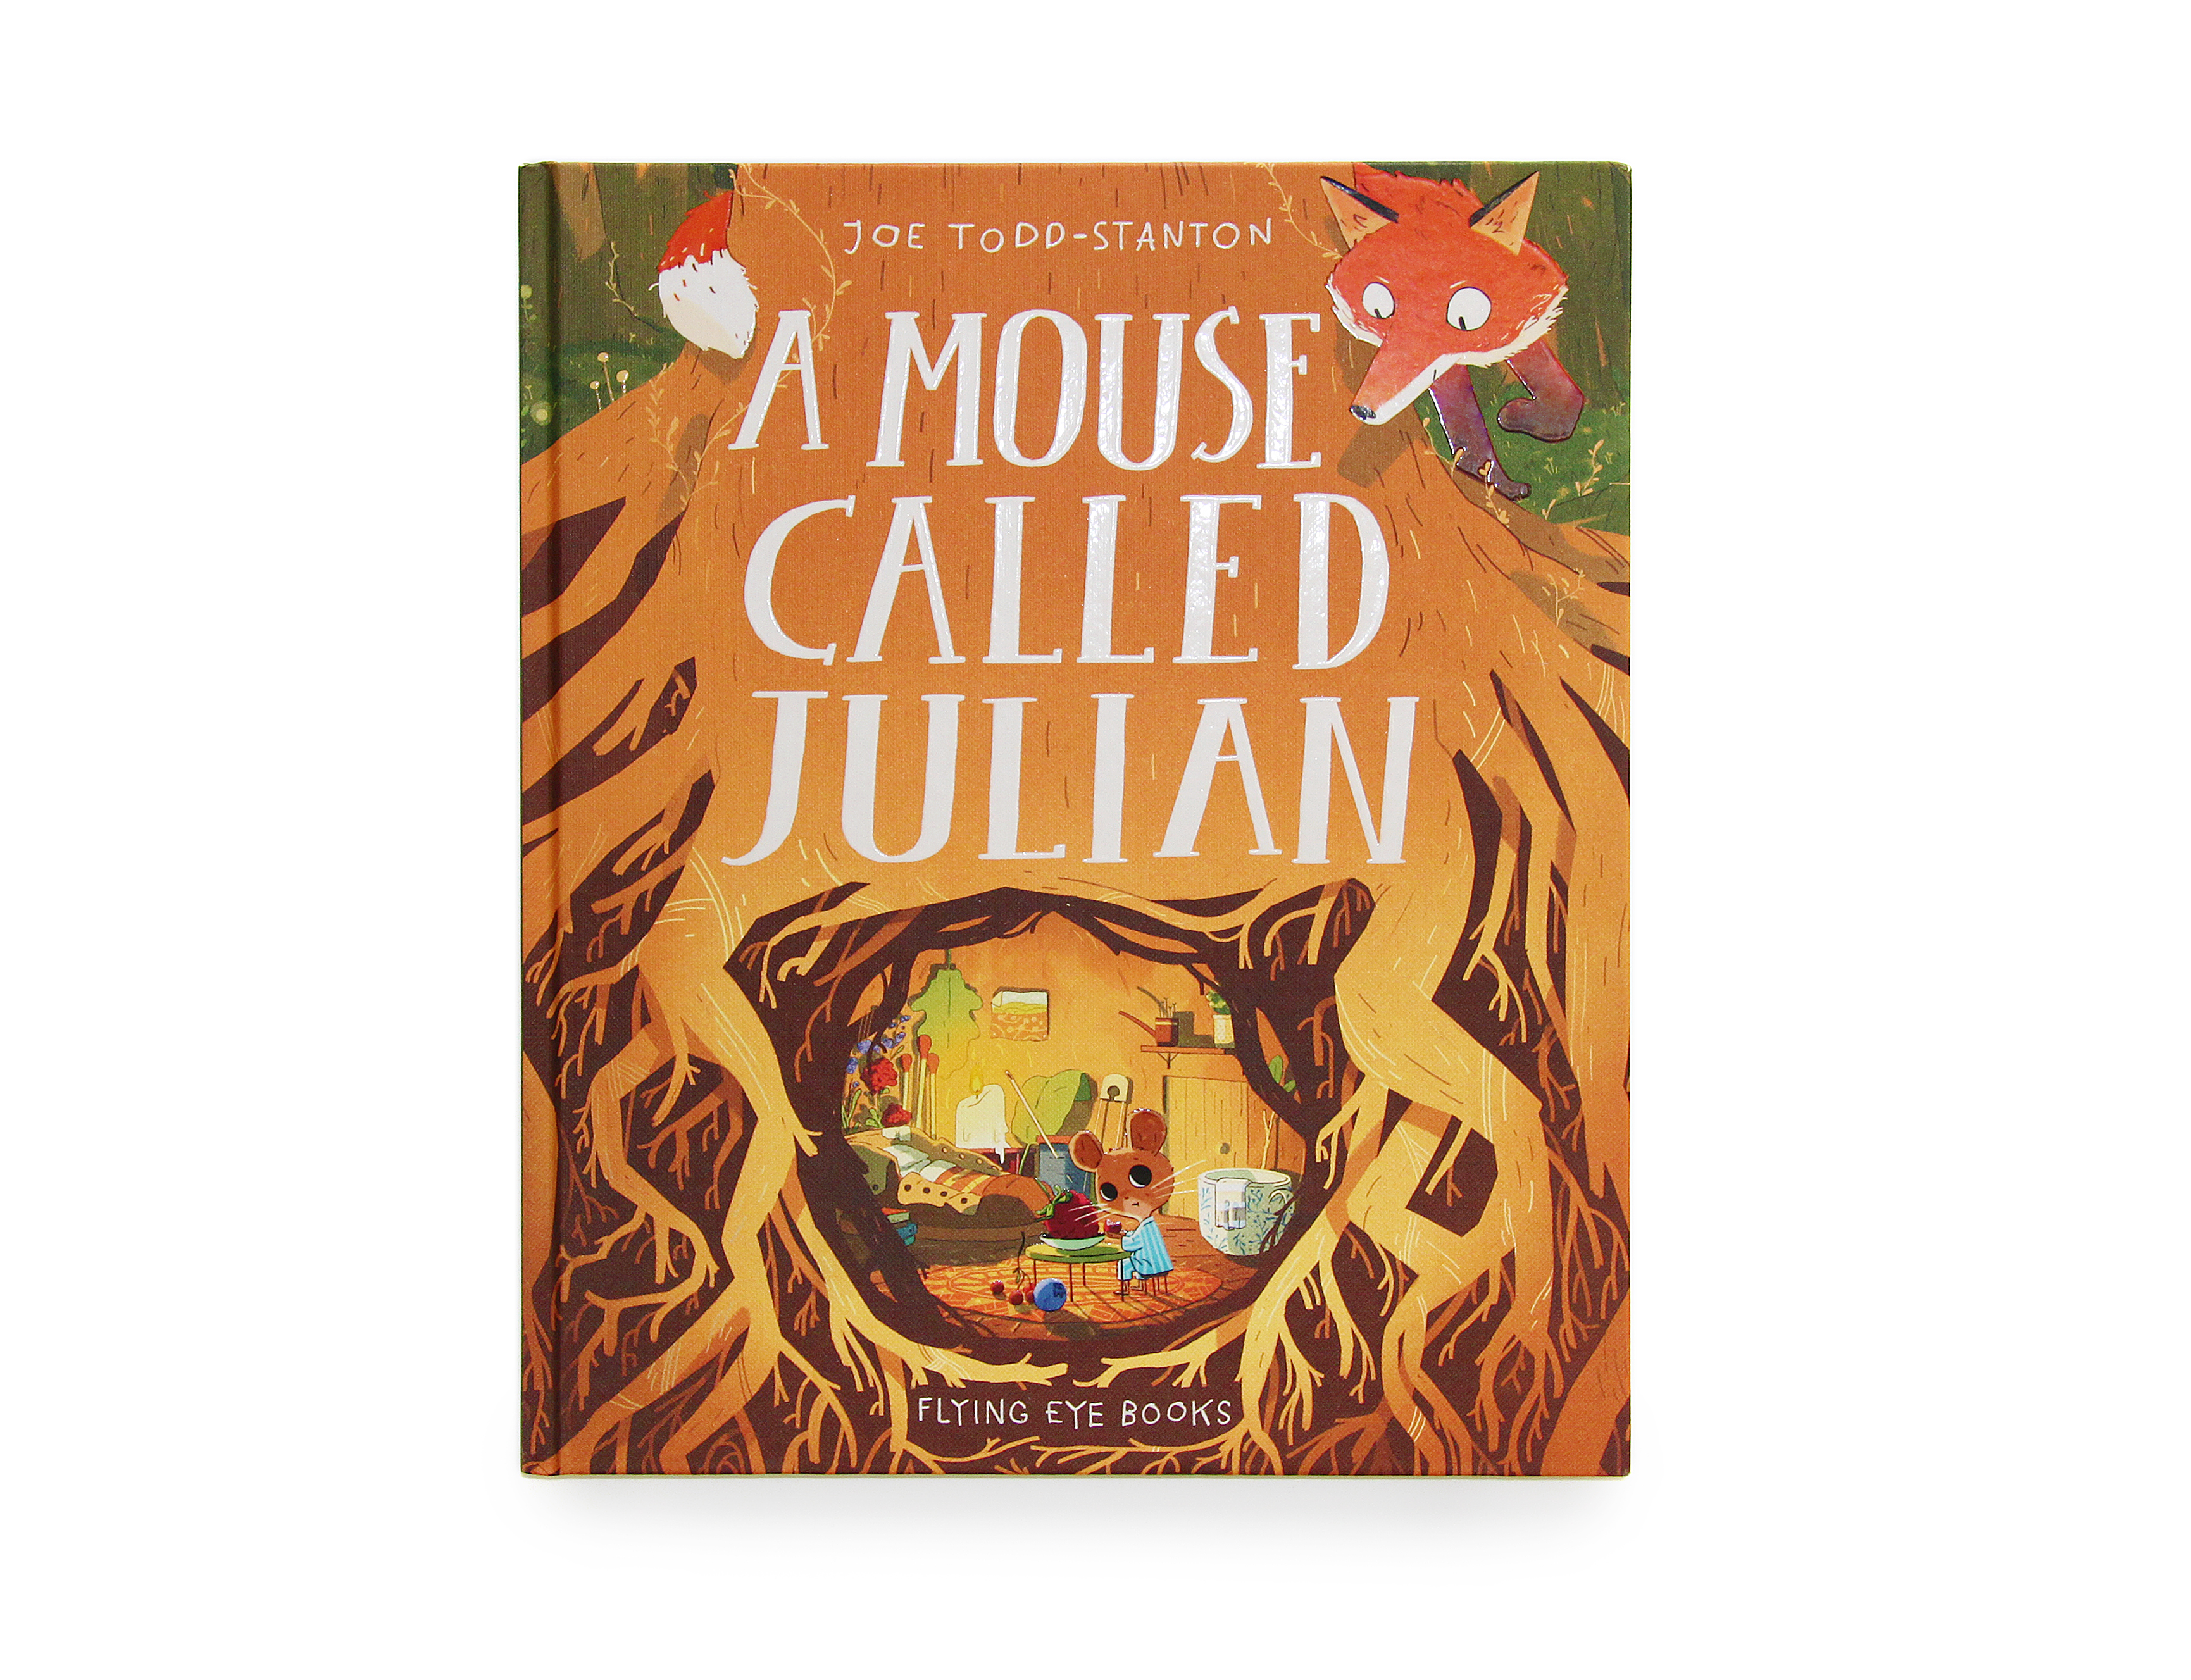 A Mouse Called Julian – Flying Eye Books